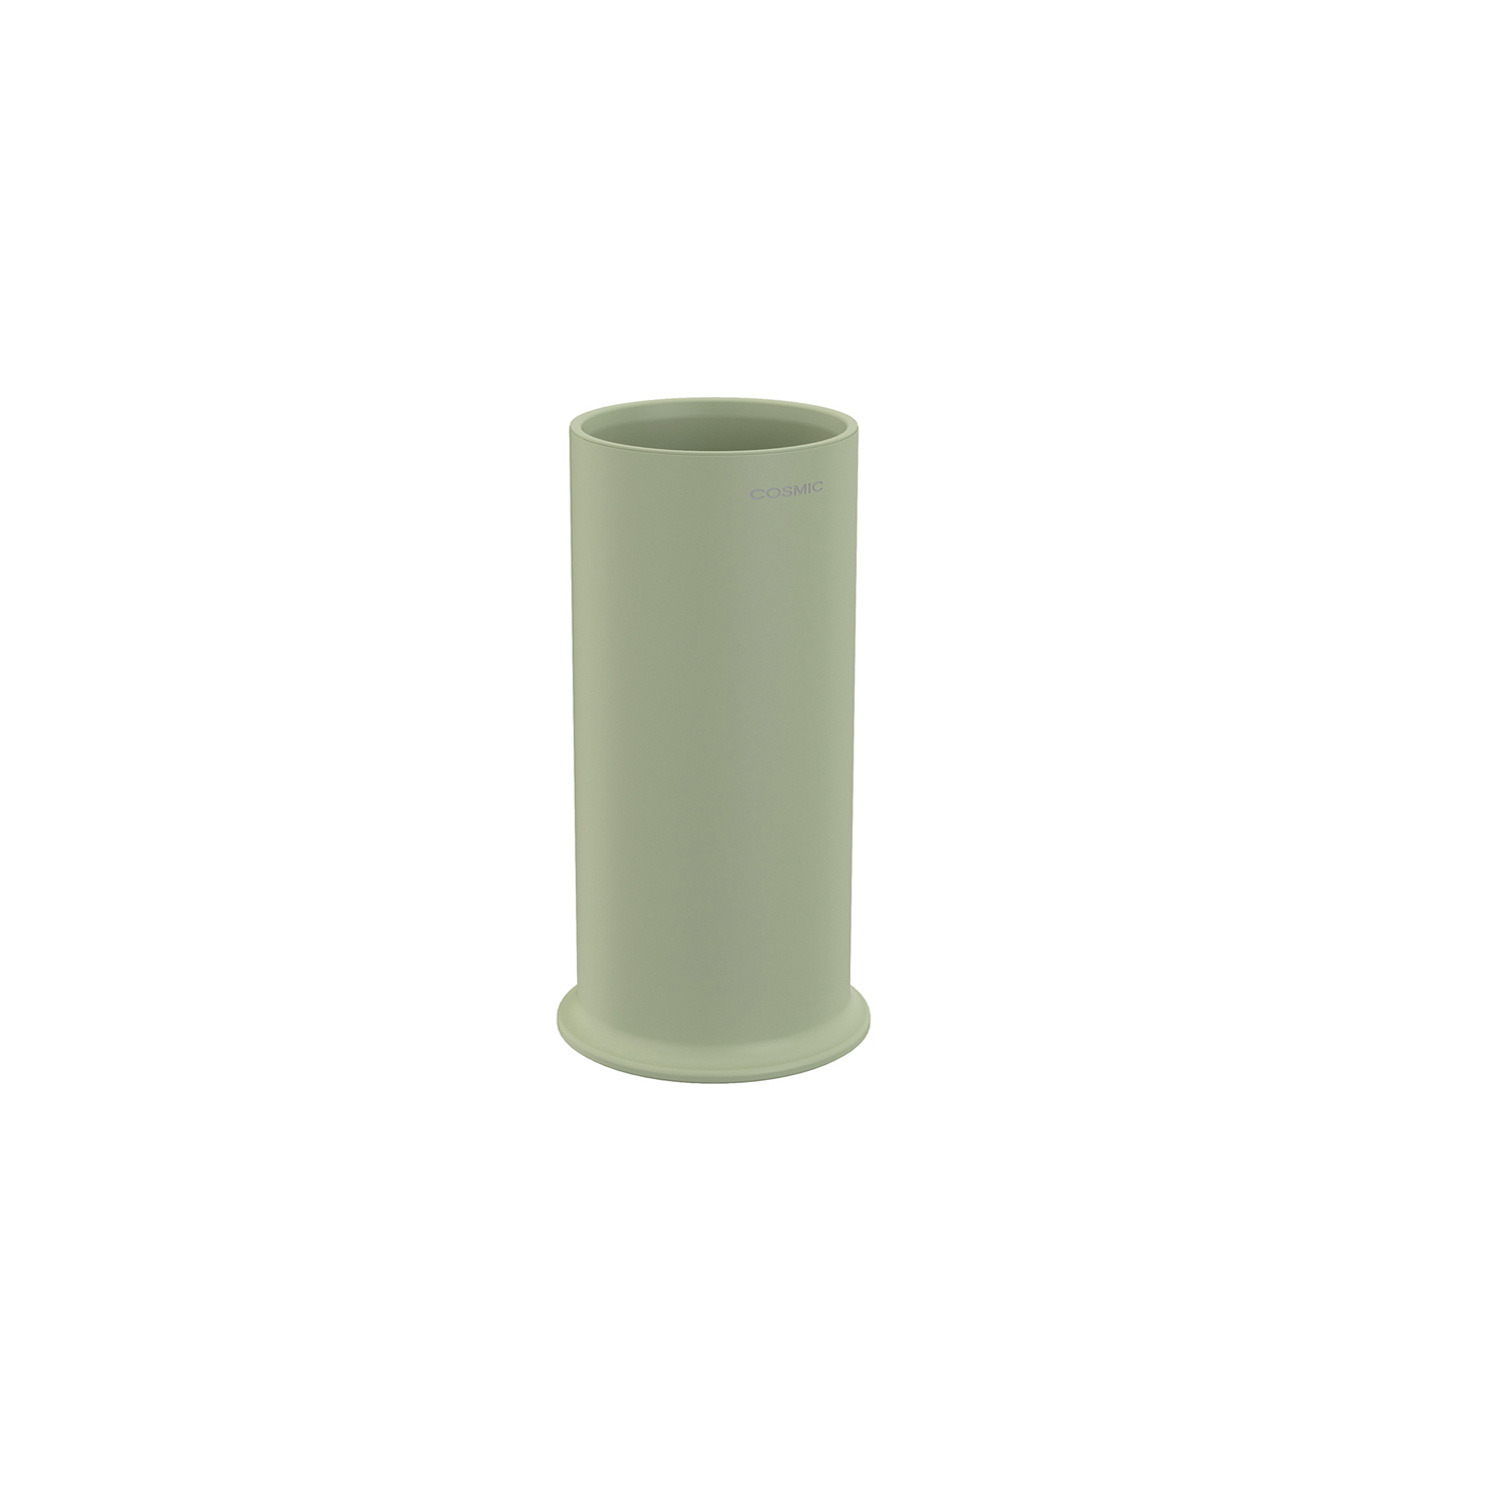 cosmic Geyser Stand-Zahnbürstenhalter salbei grün matt-2778651